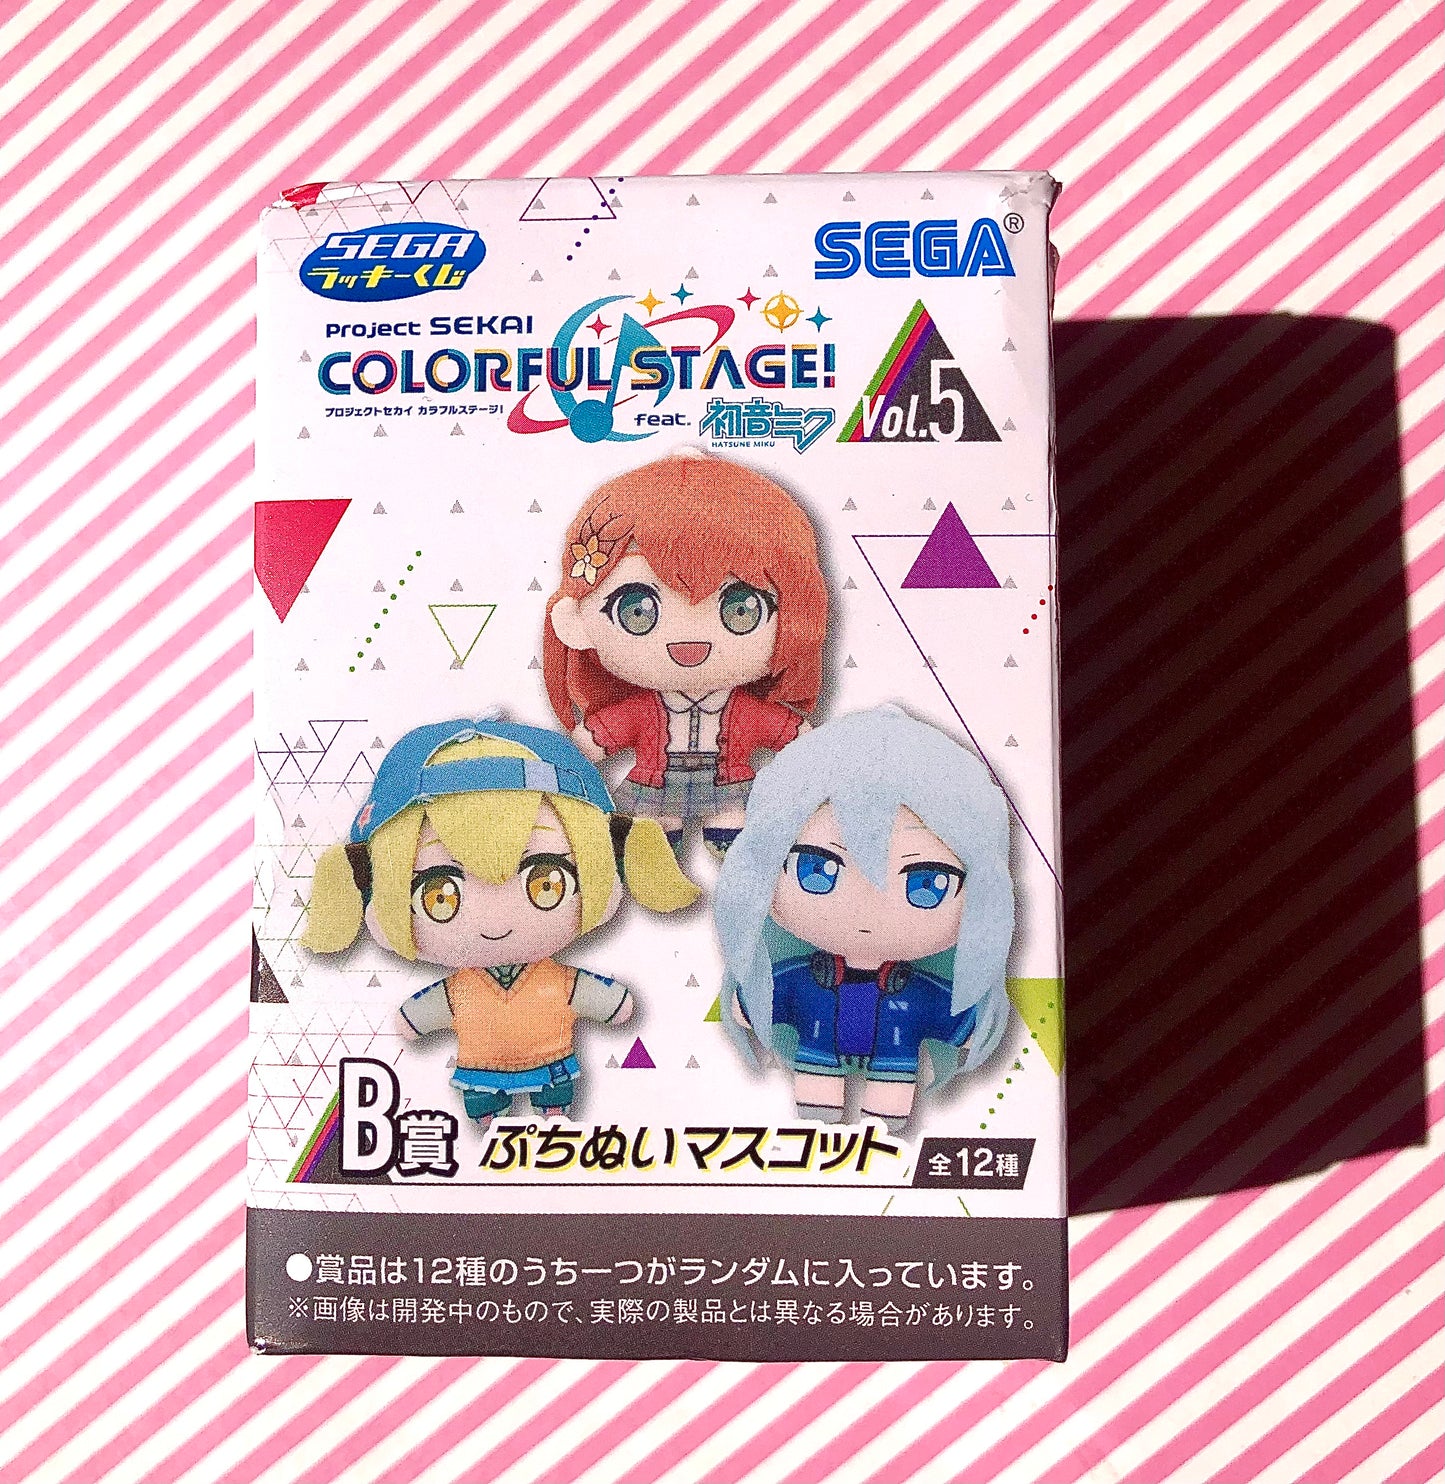 Mini Peluche Gacha Project Sekai Colorful Stage! ft. Hatsune Miku Vol. 5